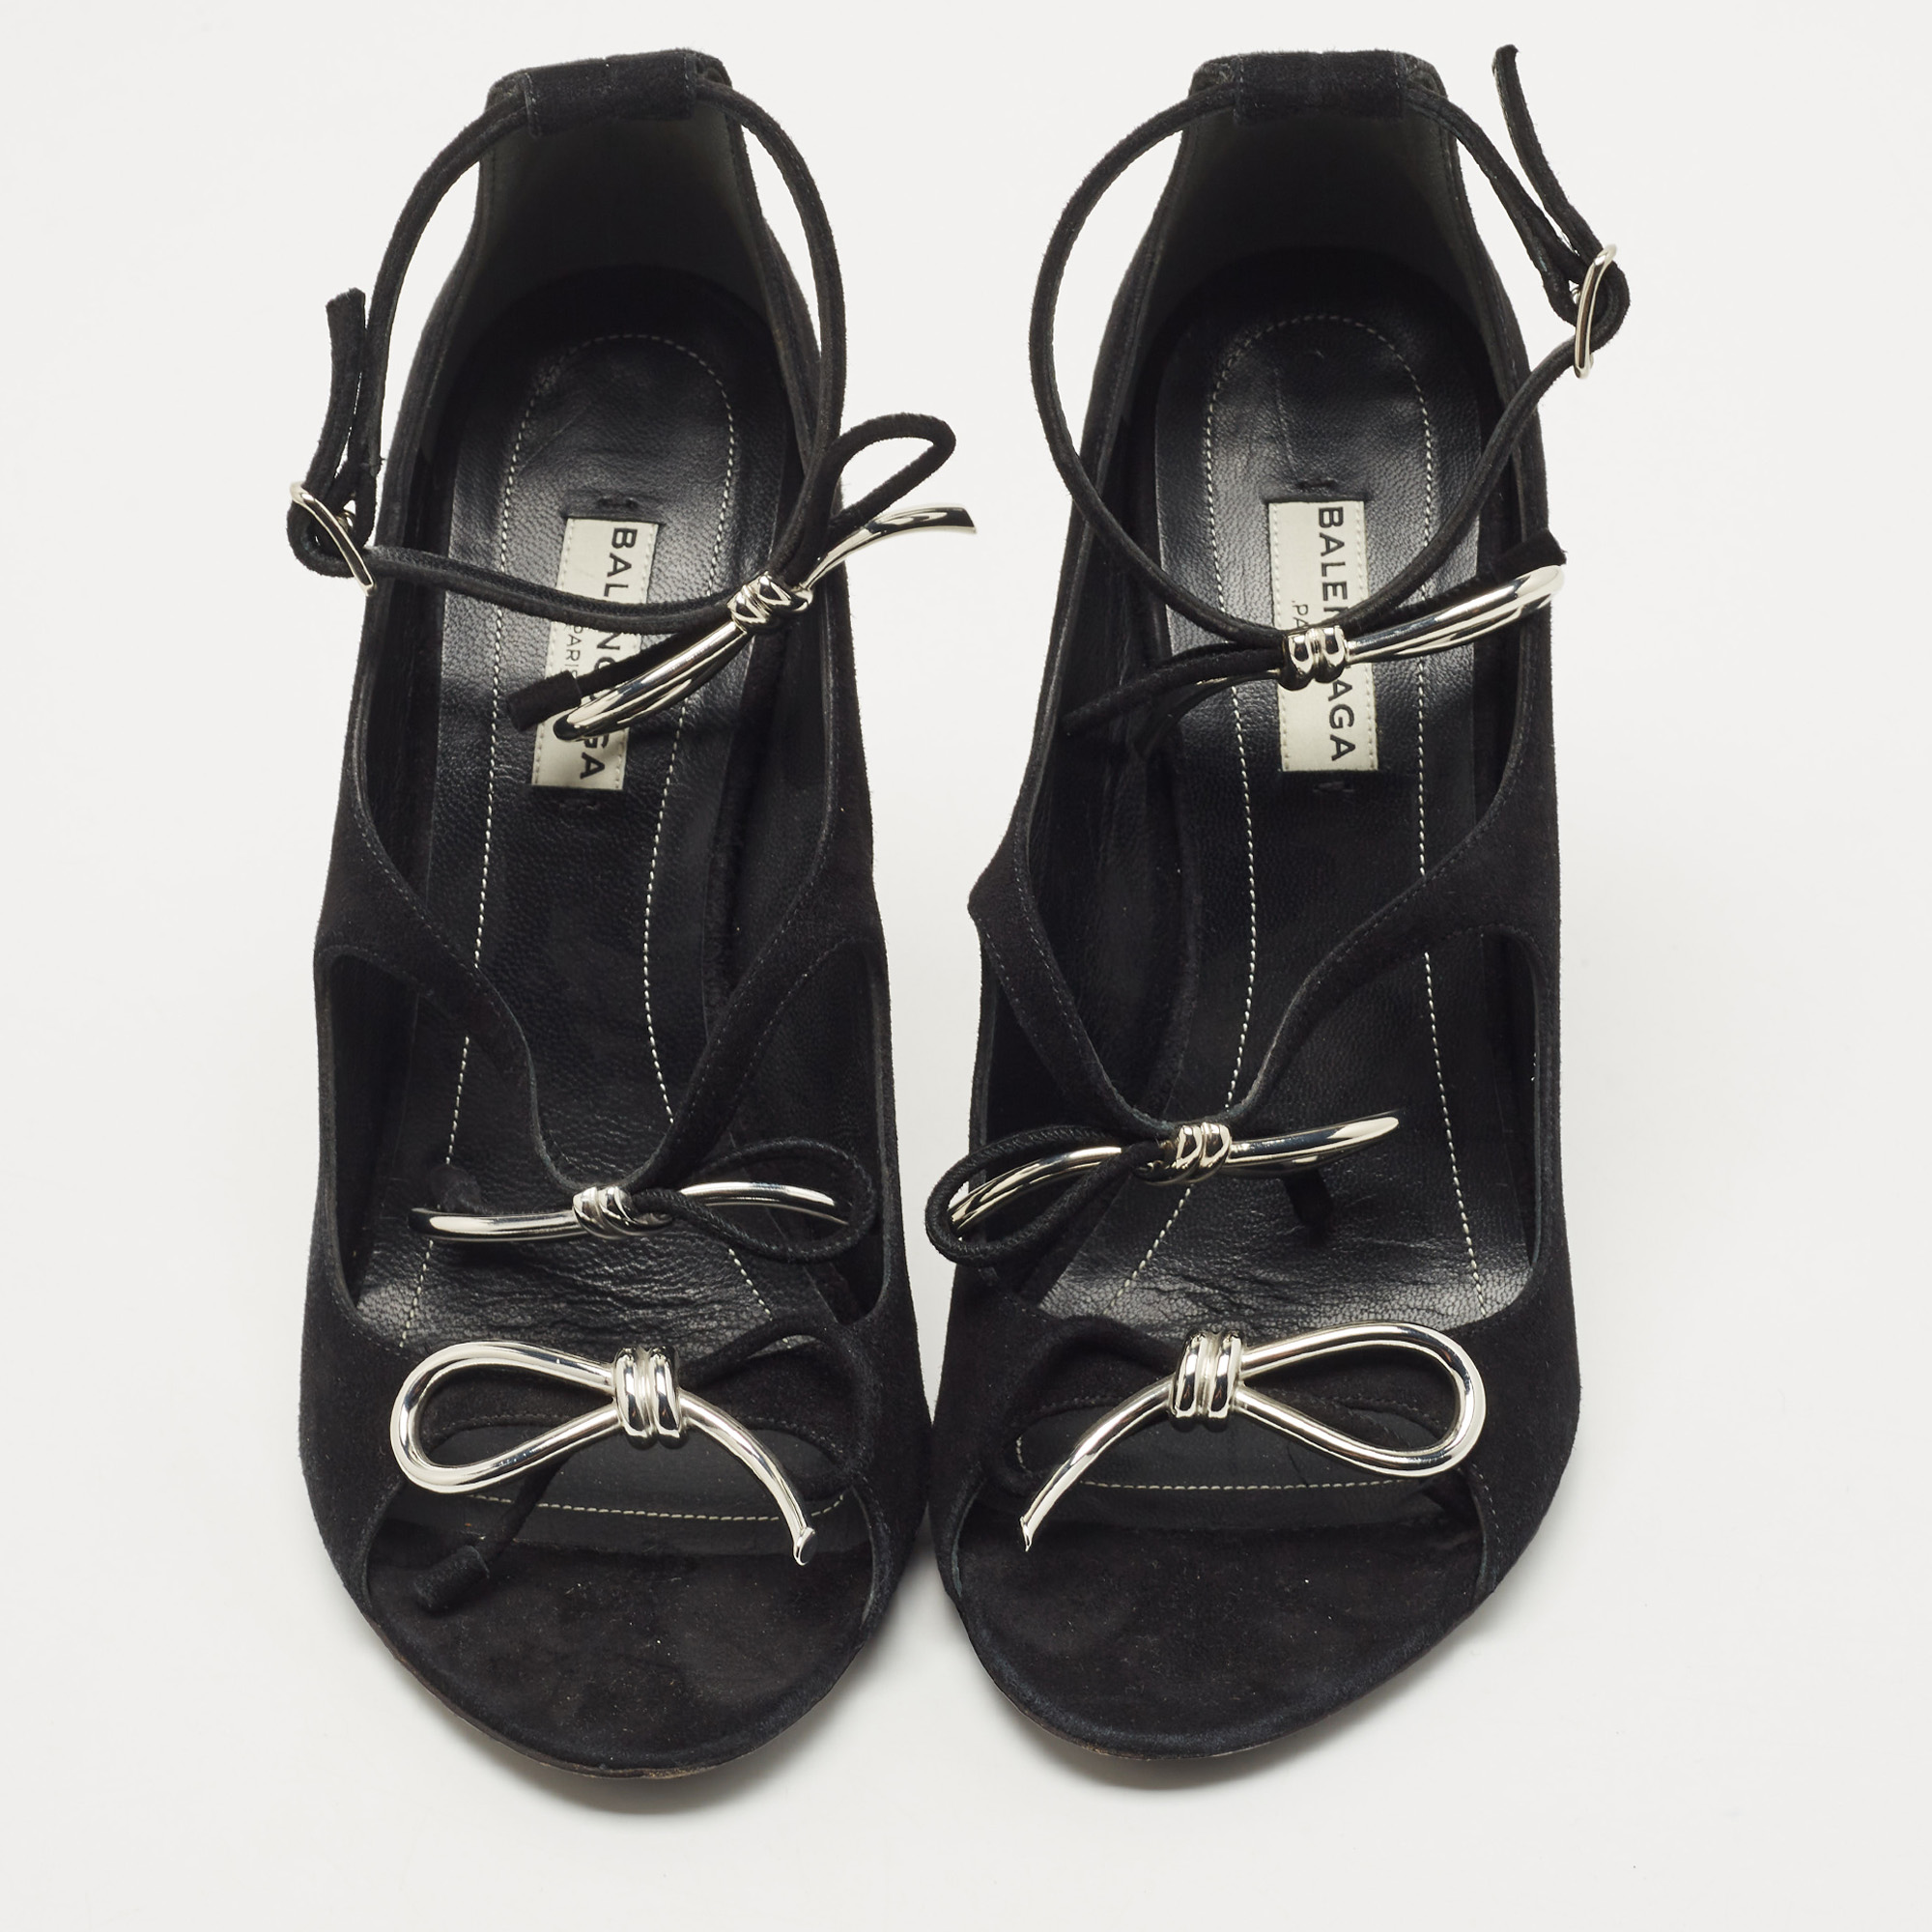 Balenciaga Black Suede Boucle Bow Open Toe Pumps Size 38.5